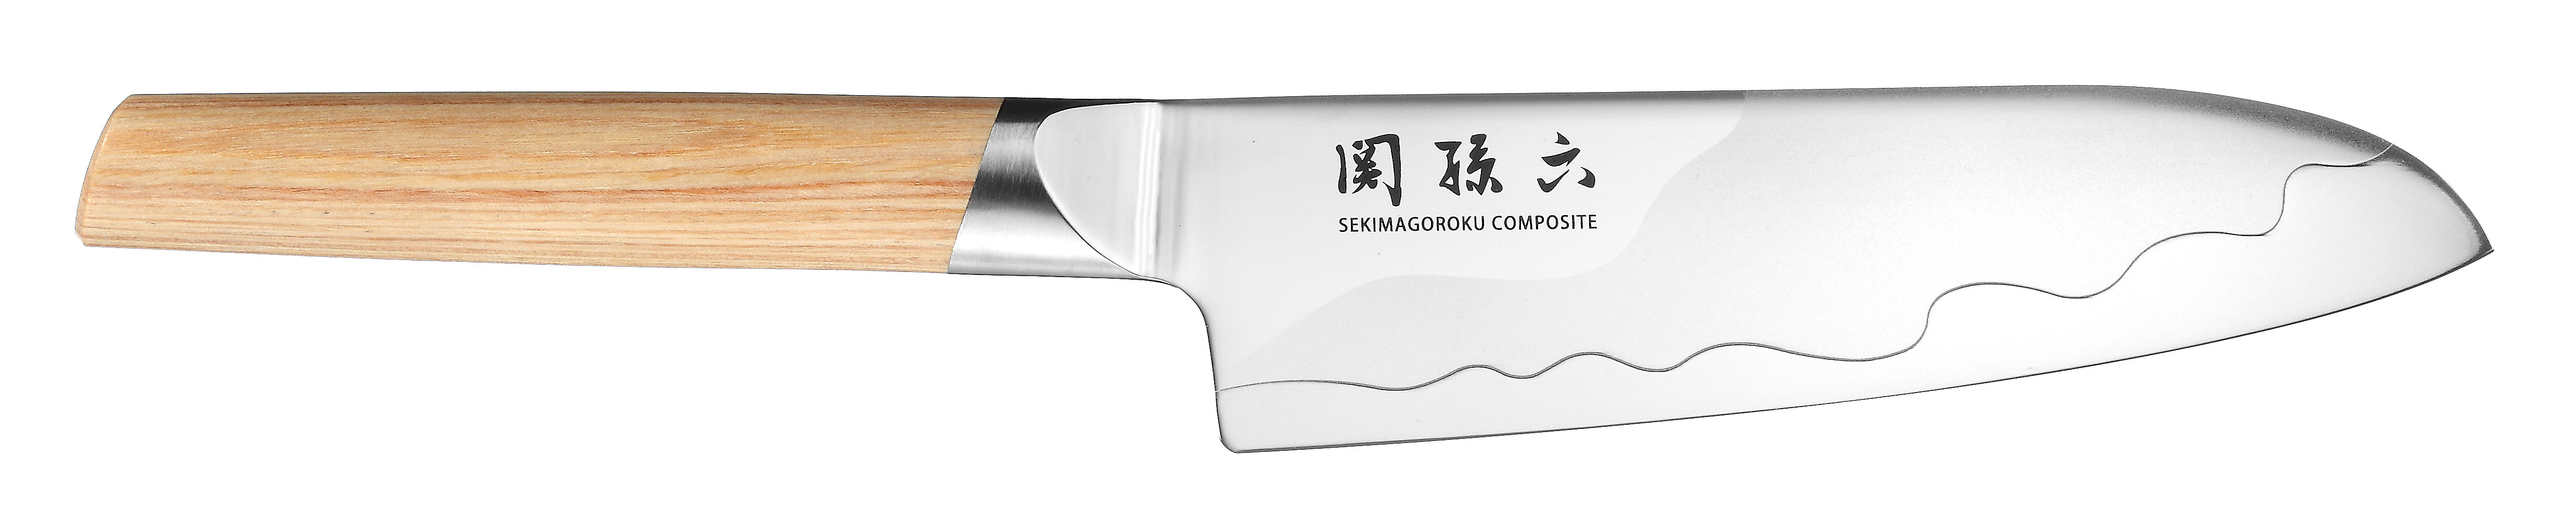 KAI SEKI MAGOROKU COMPOSITE MGC-0402